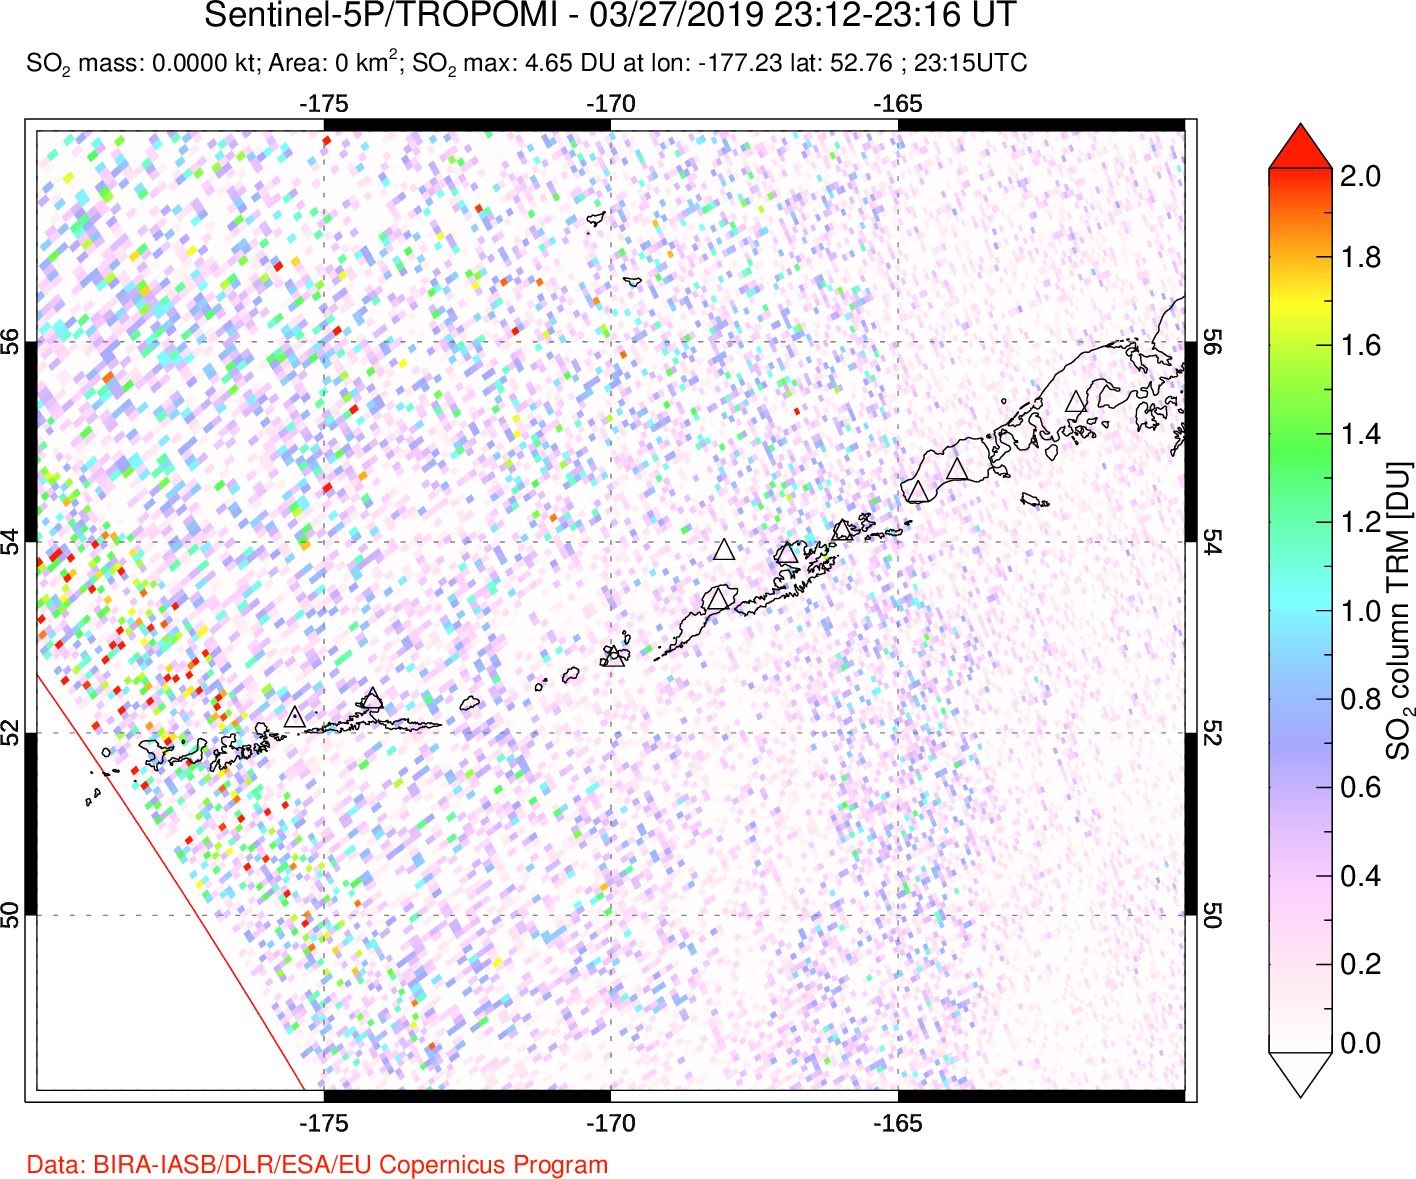 A sulfur dioxide image over Aleutian Islands, Alaska, USA on Mar 27, 2019.